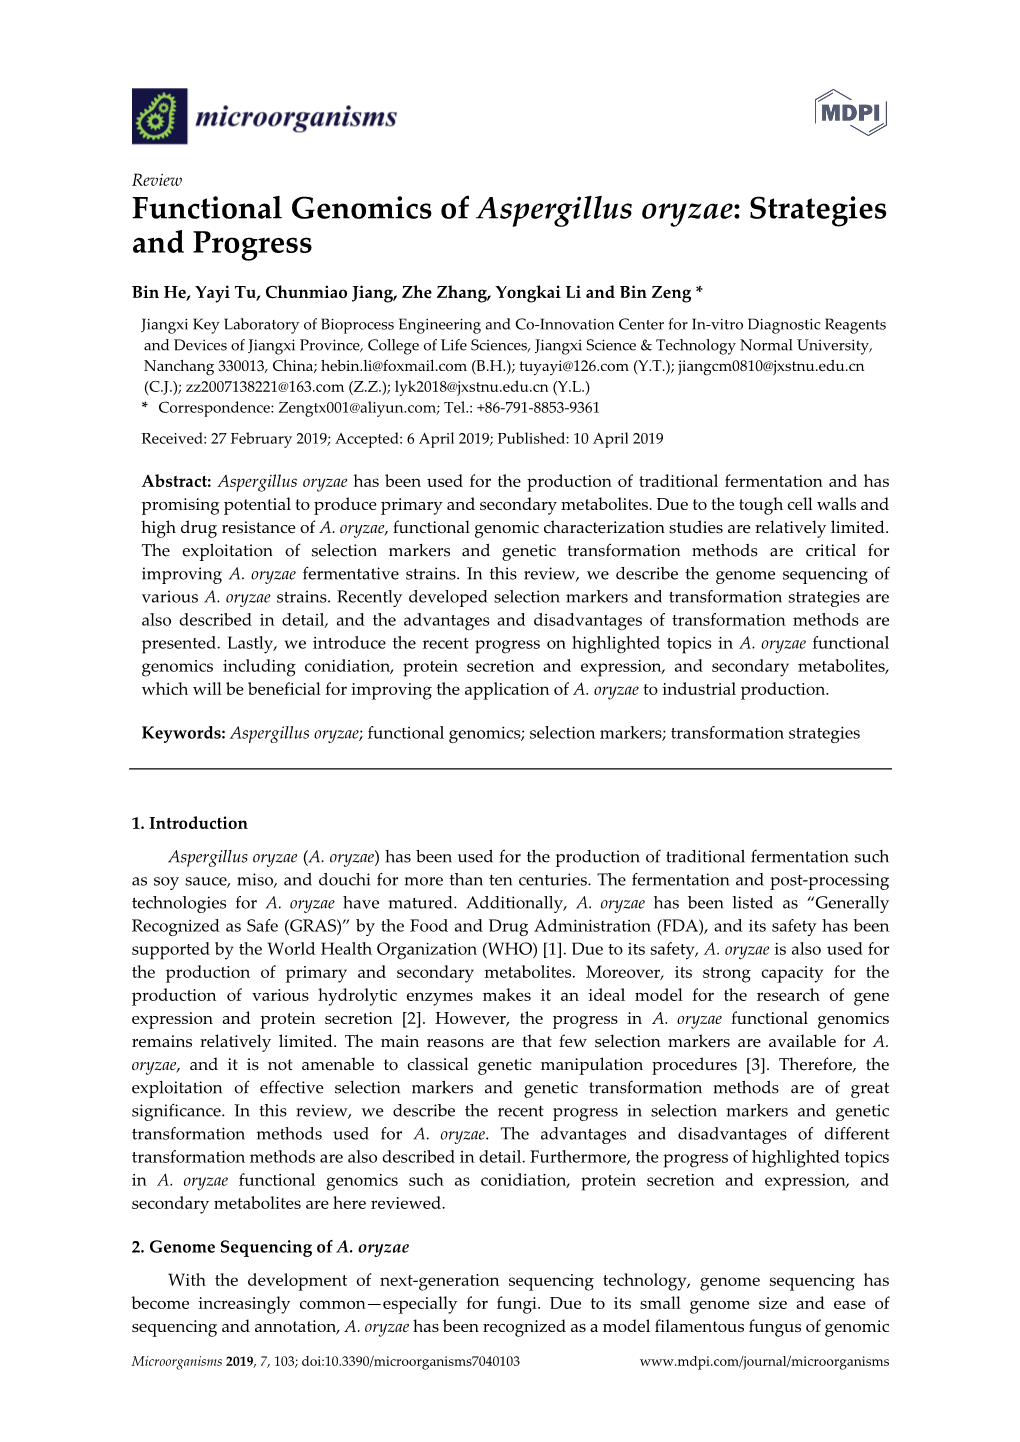 Functional Genomics of Aspergillus Oryzae: Strategies and Progress